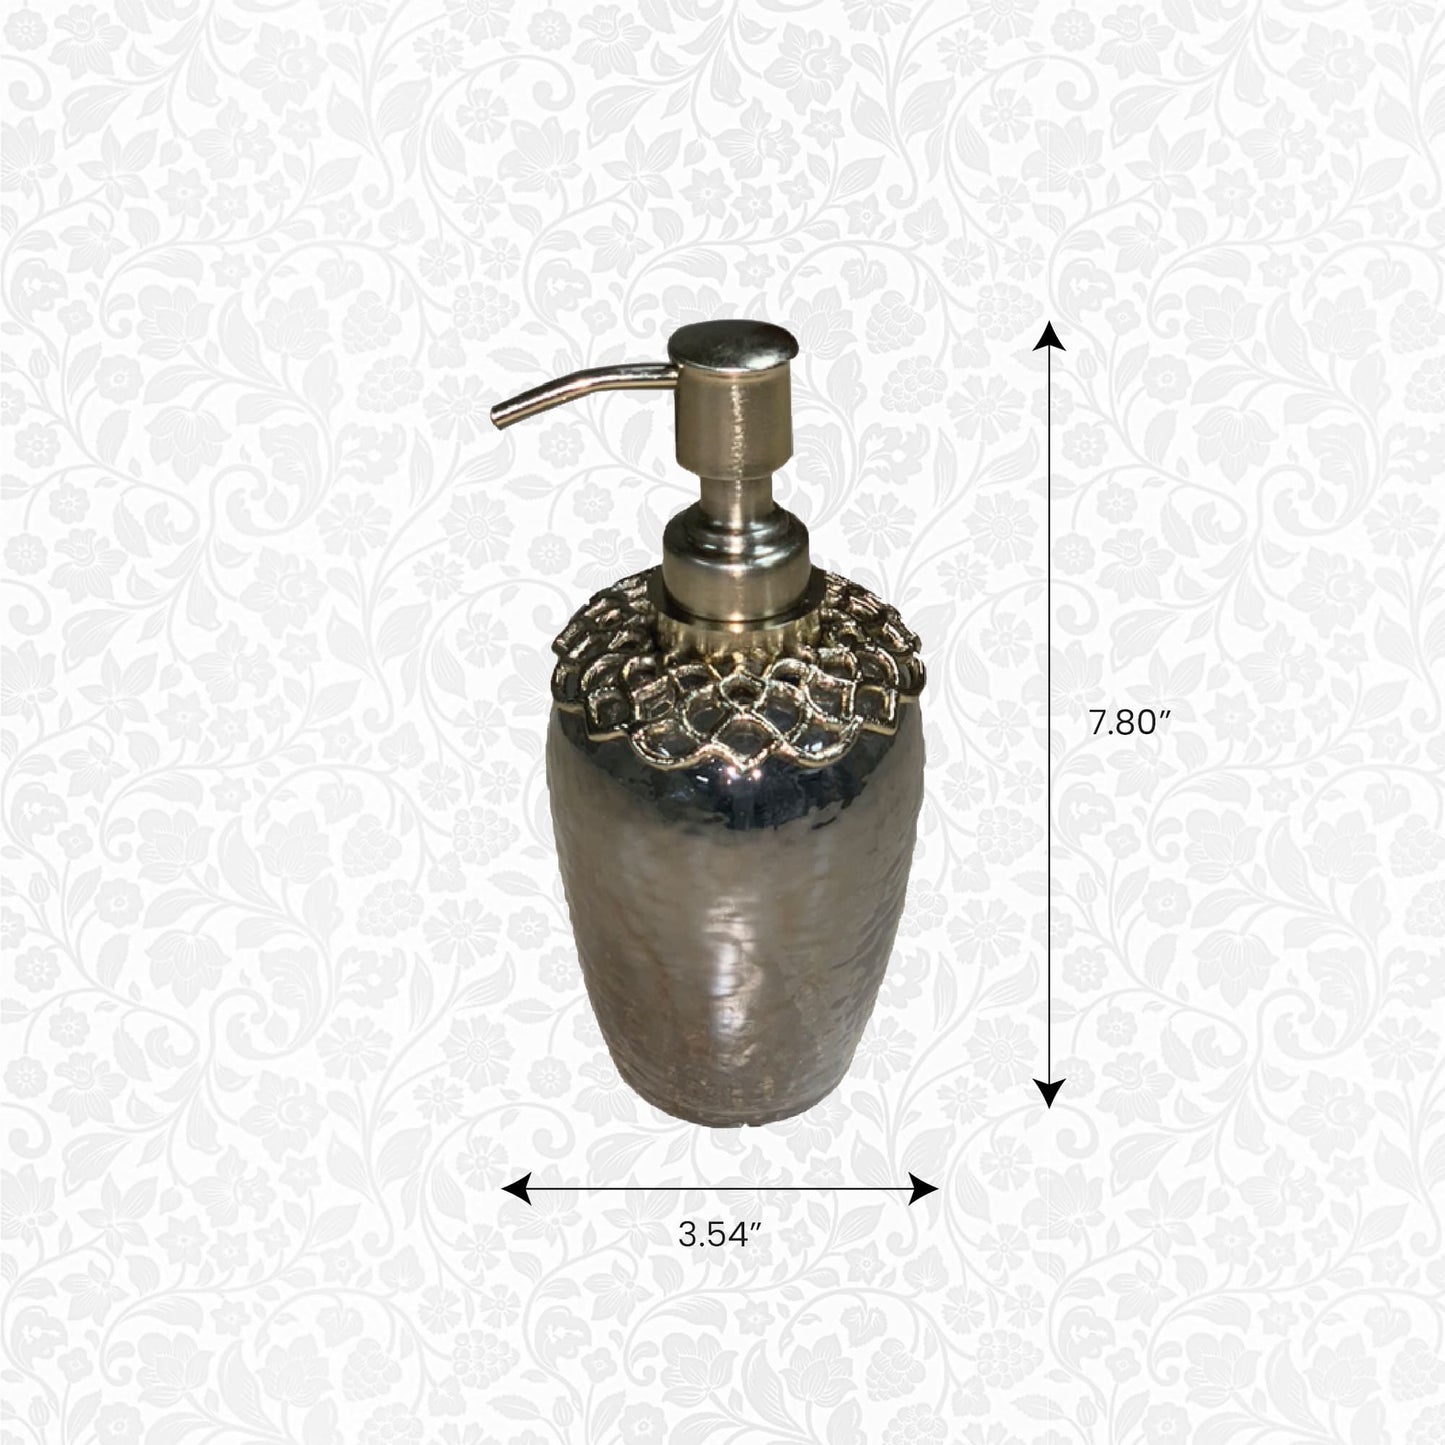 The Arabesque Collection - Liquid Soap Dispenser by Decozen